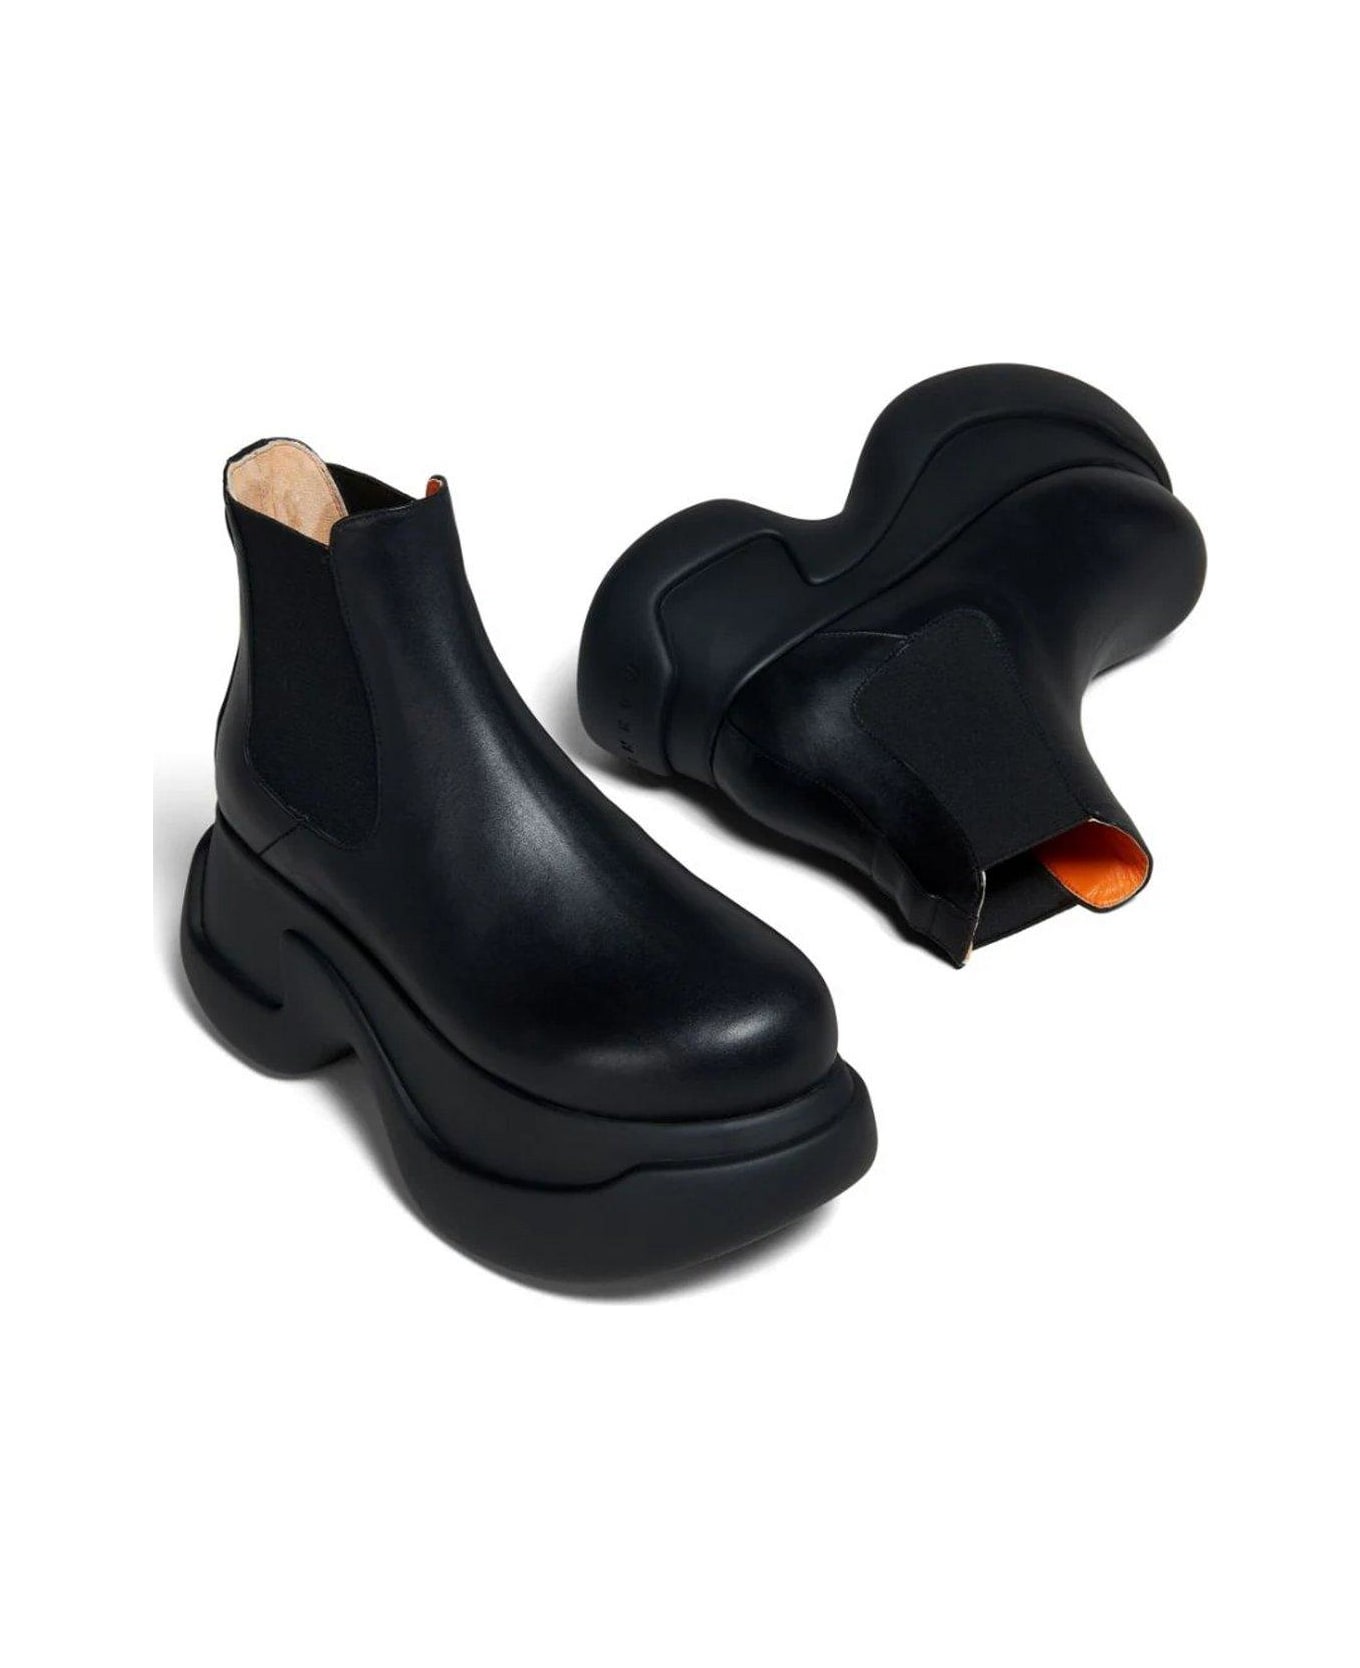 Marni Round-toe Slip-on Ankle Boots - Nero